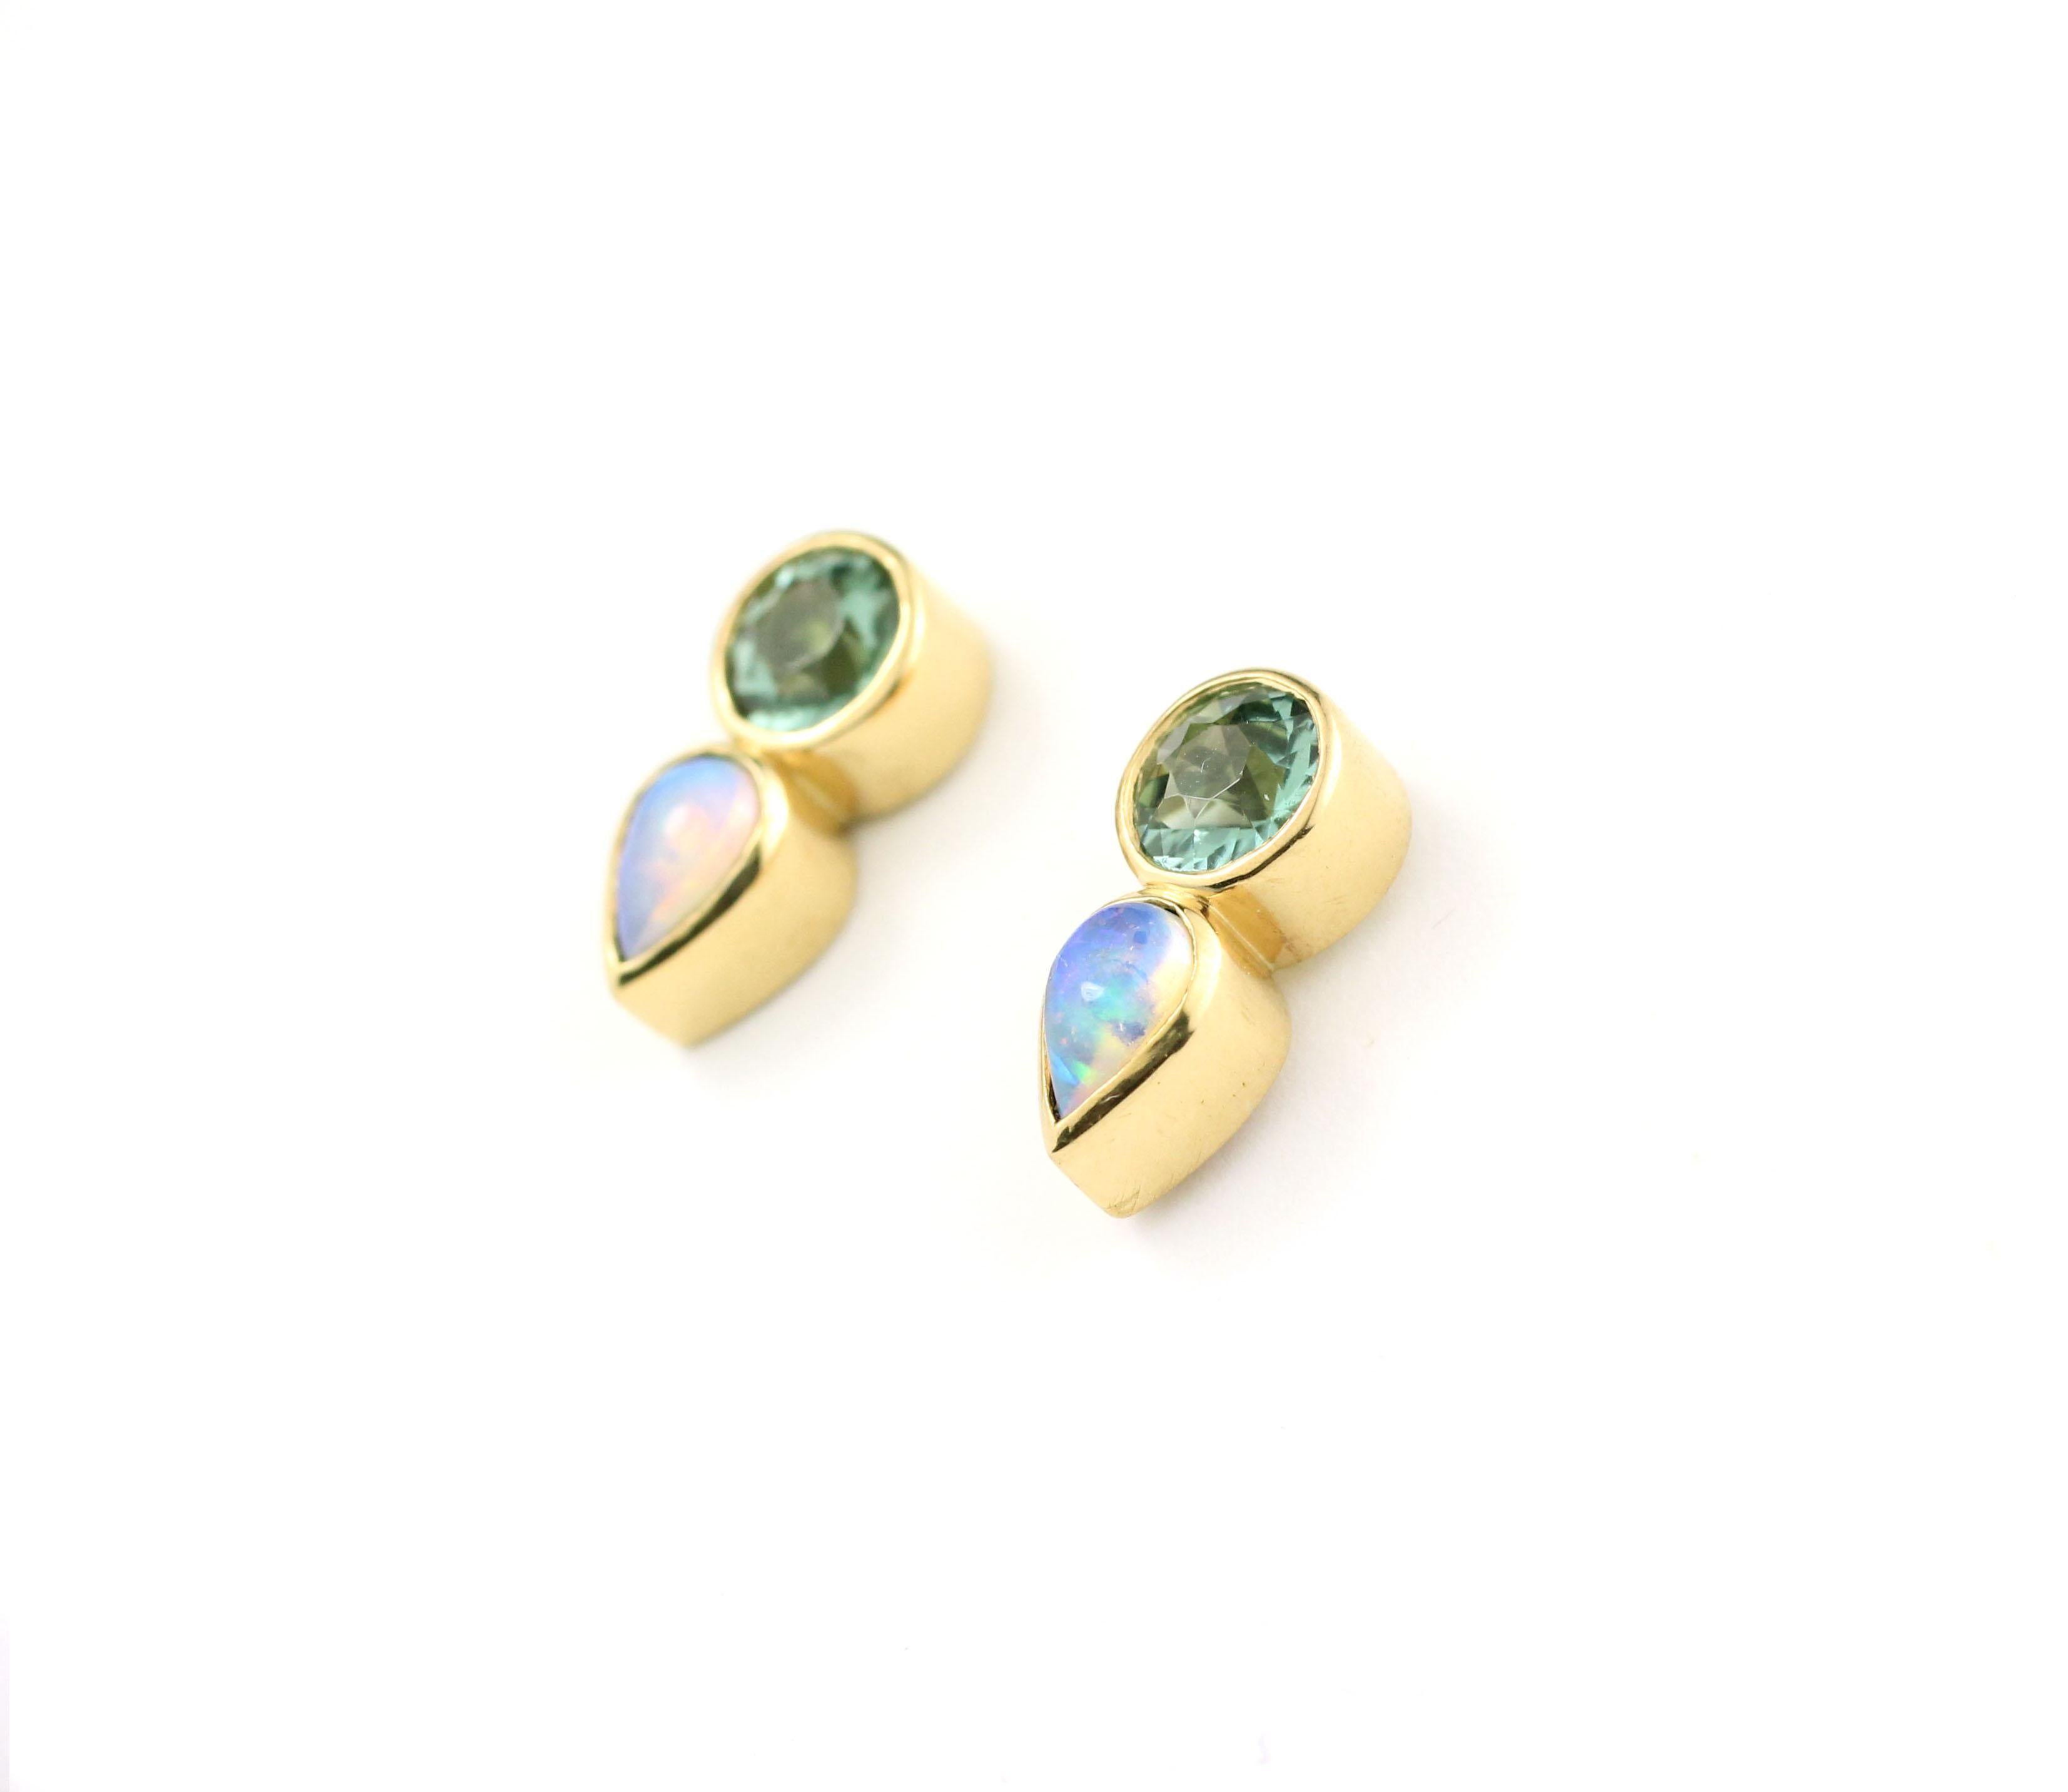 Contemporary Julius Cohen Mint Tourmaline and Opal Earrings